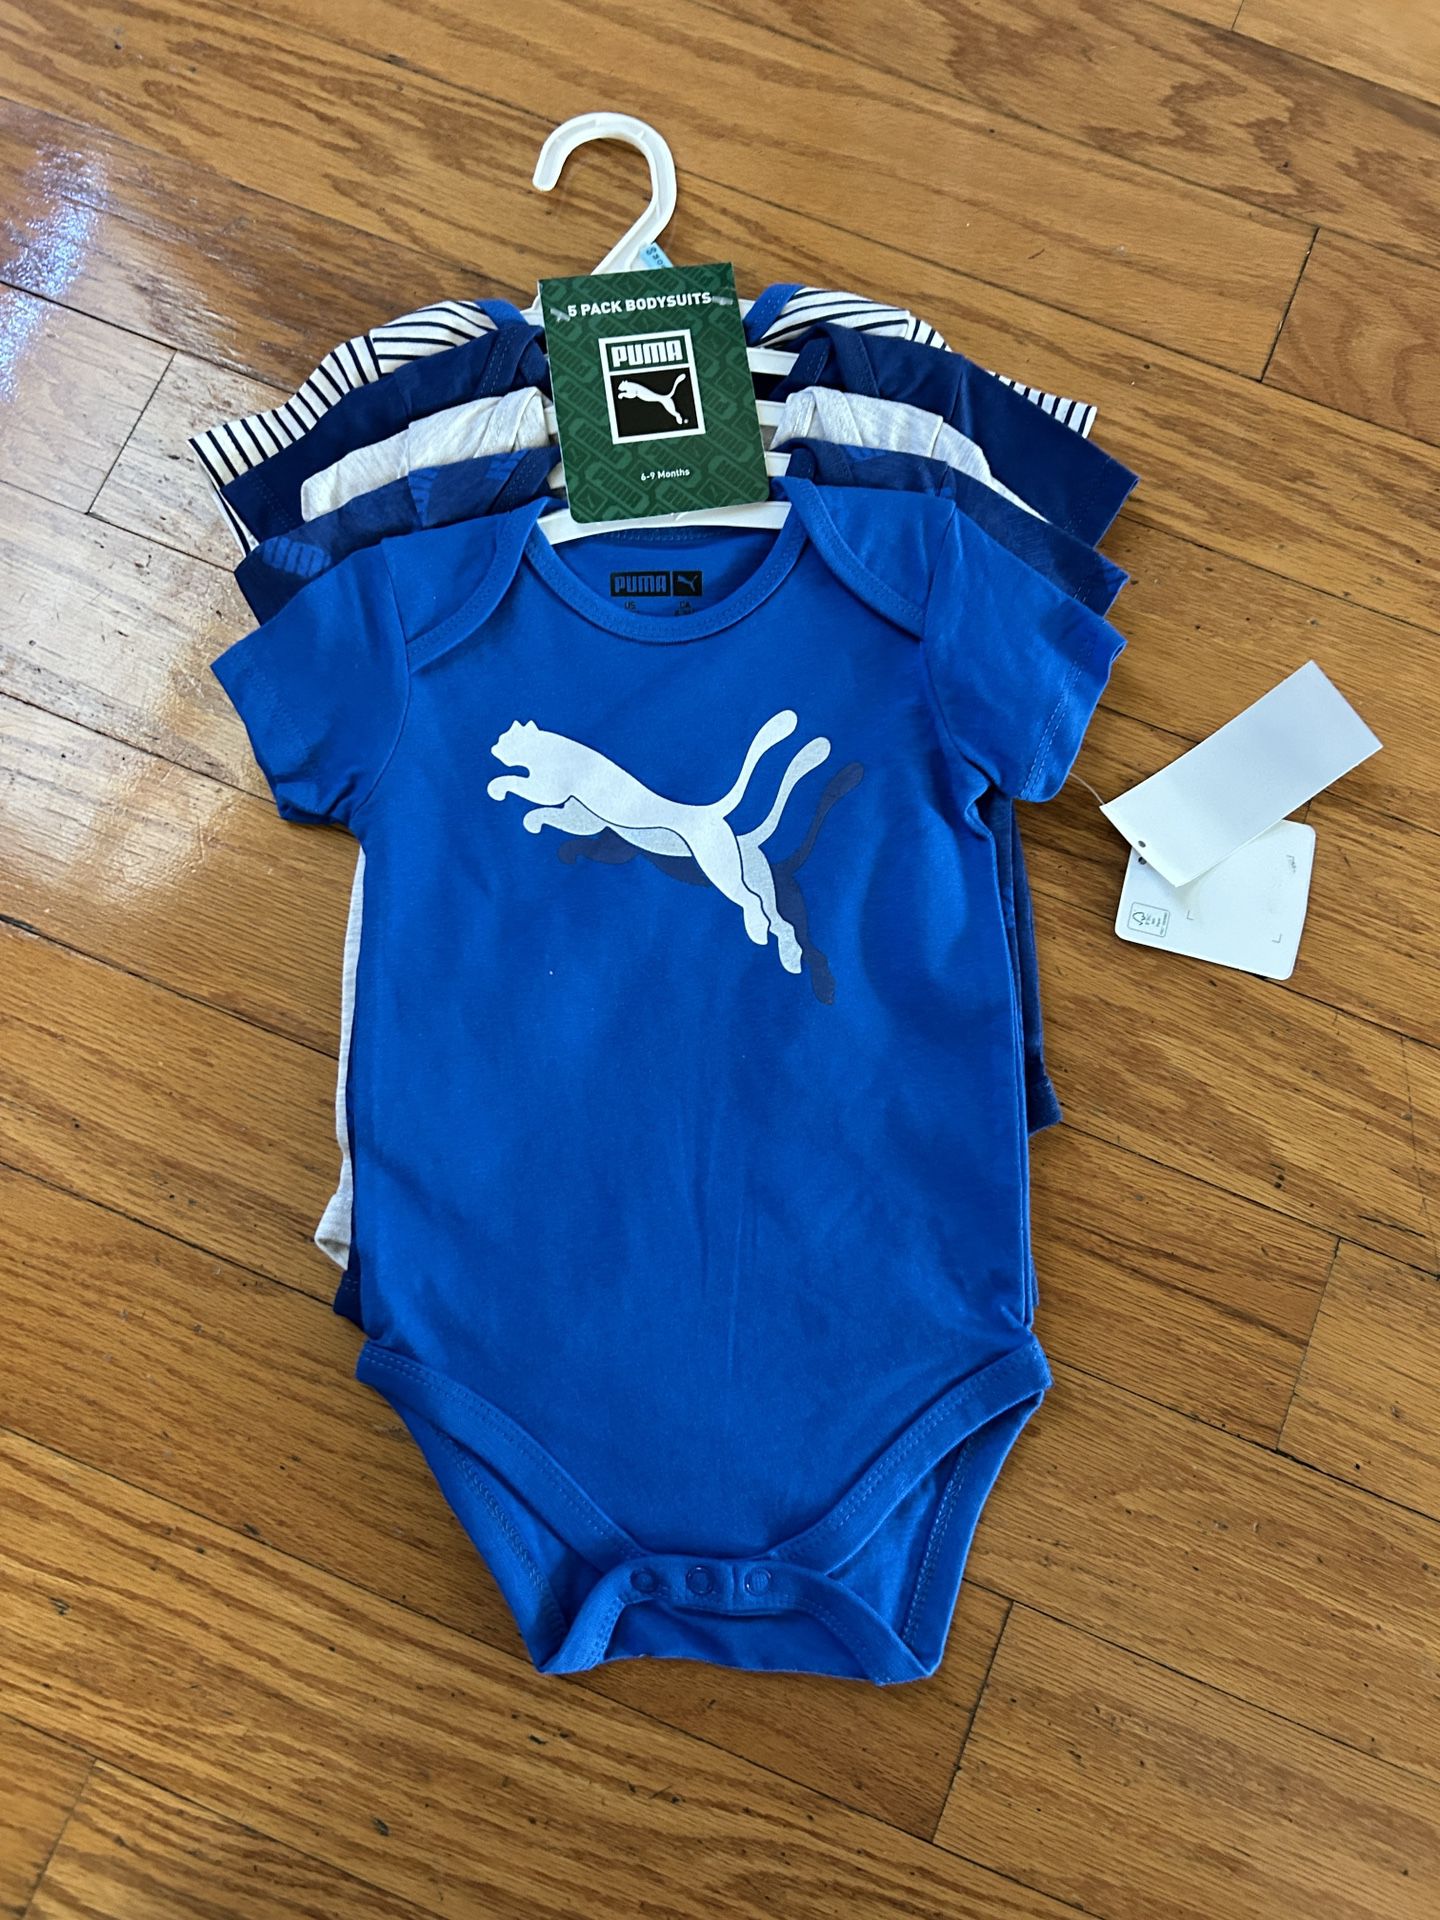 NWT Puma baby bodysuit 5pack size 6-9m